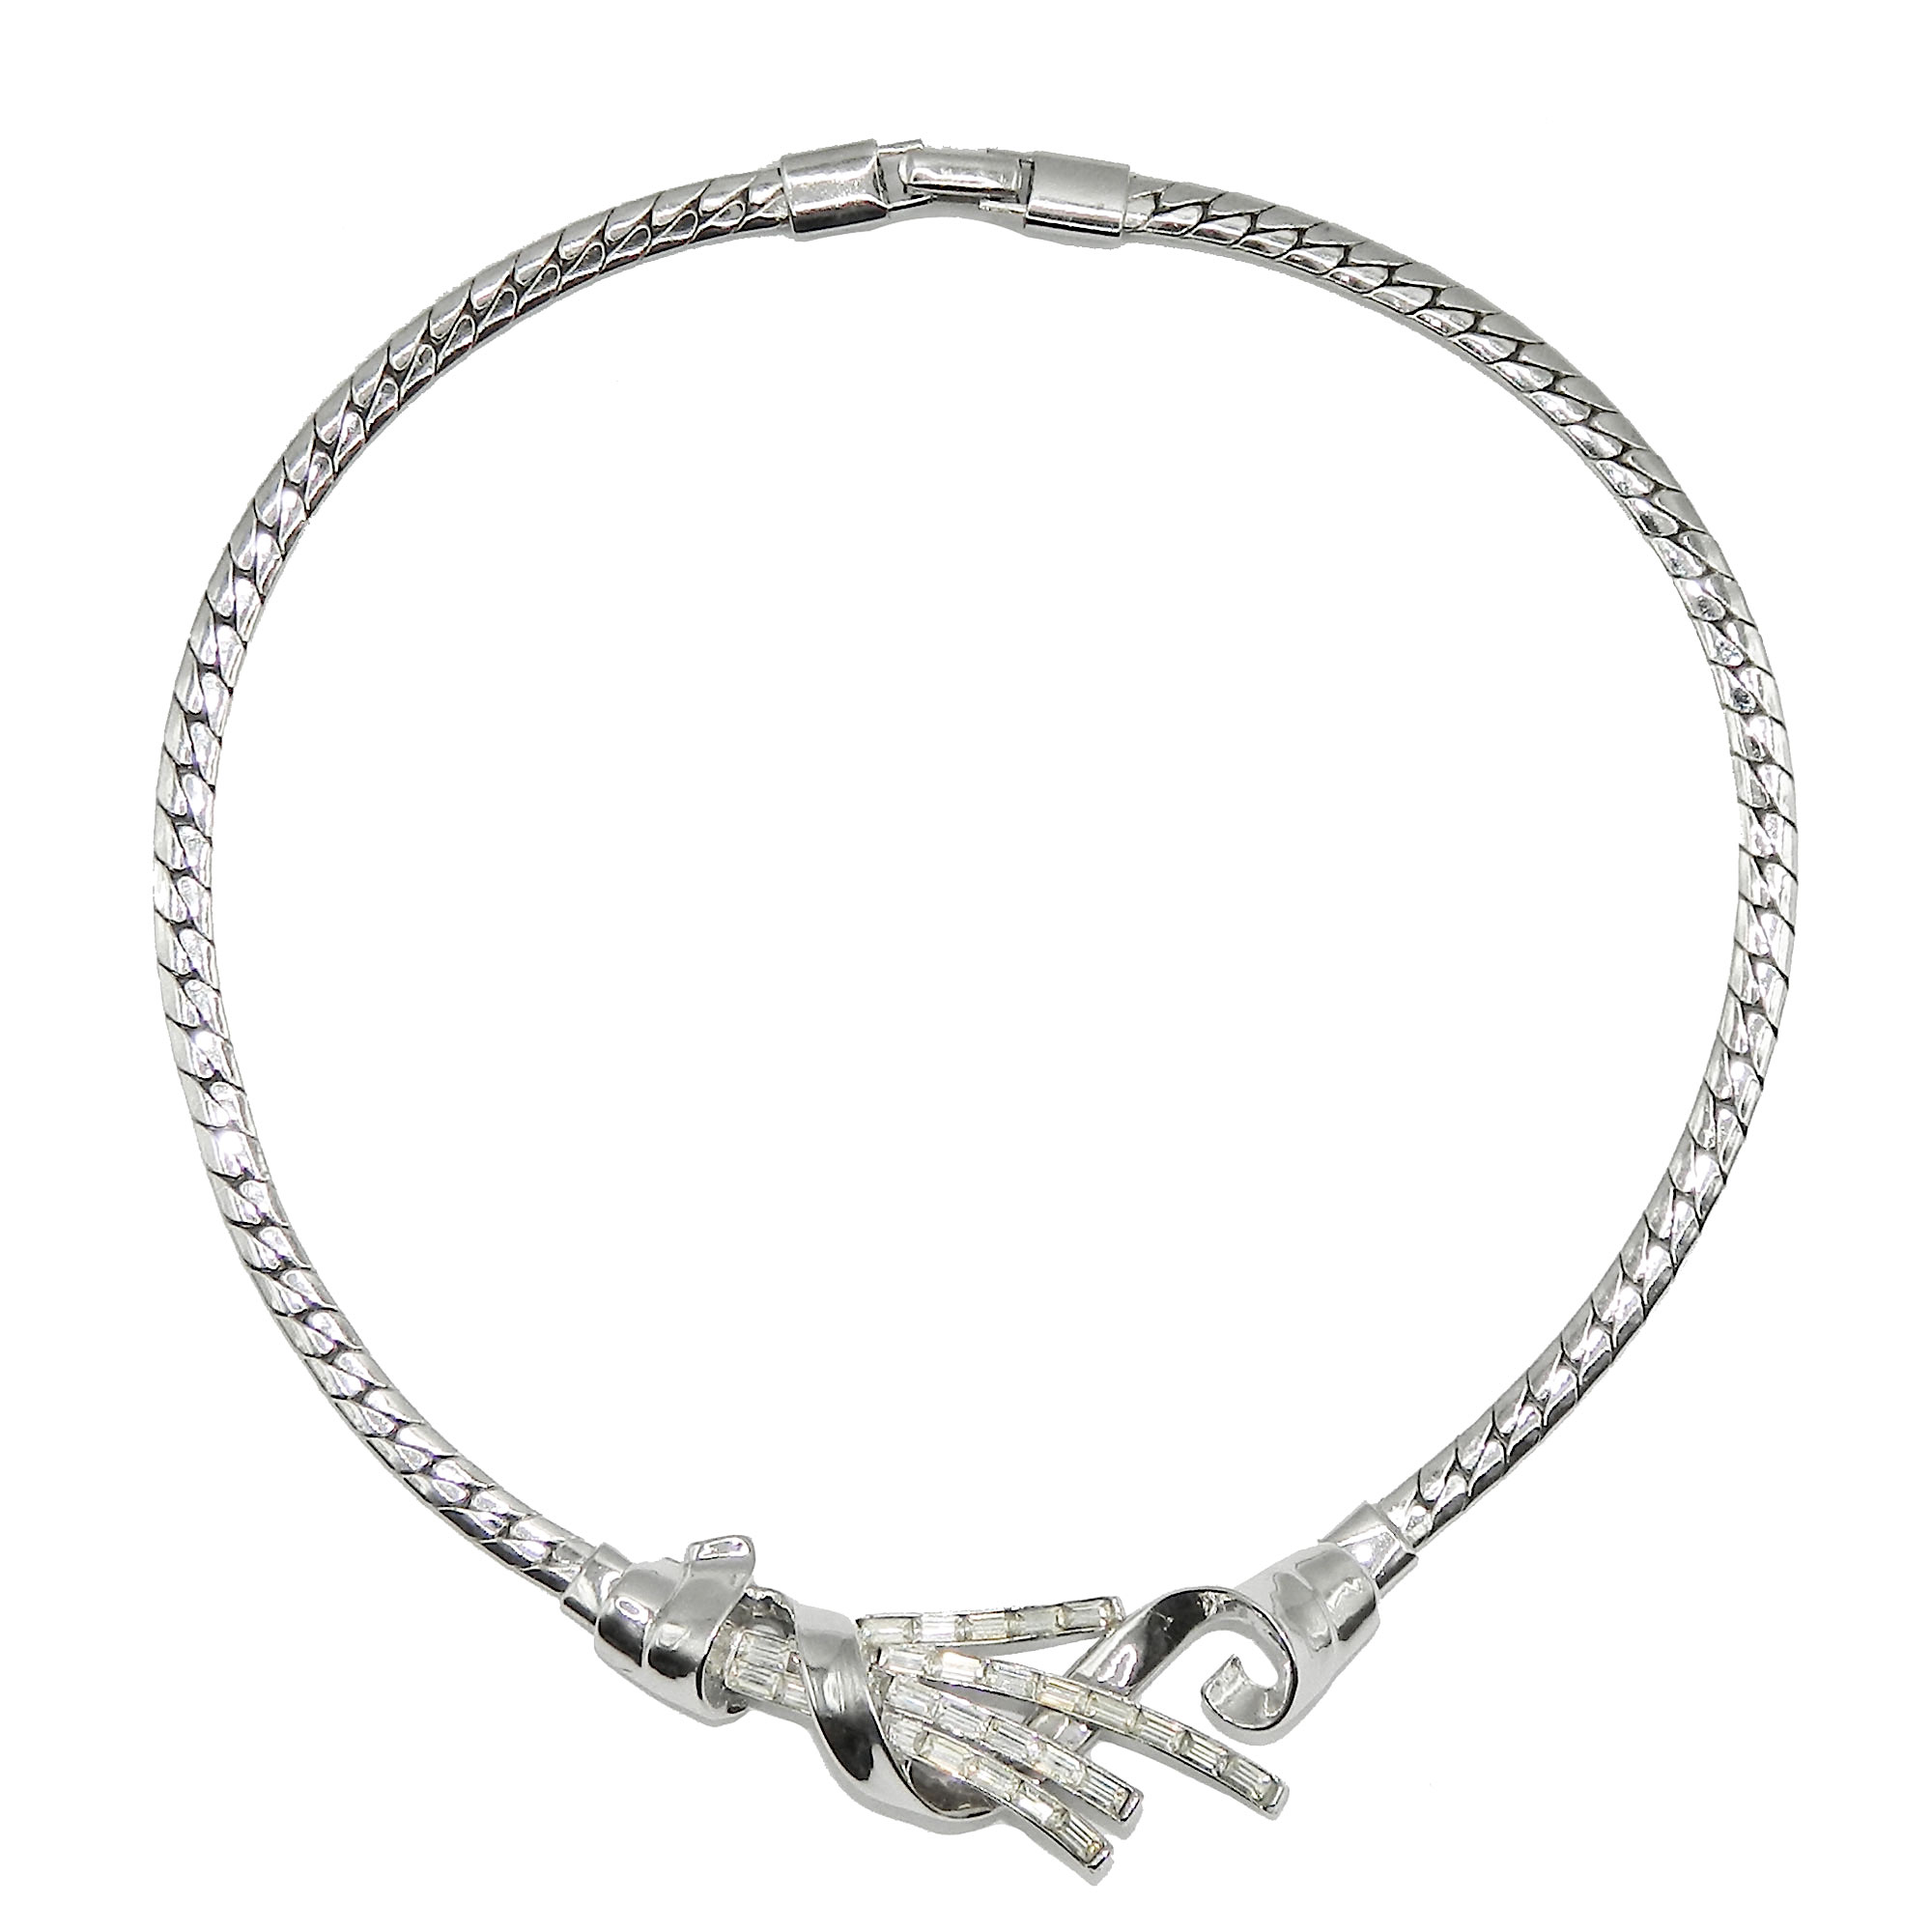 Trifari rhinestone necklace